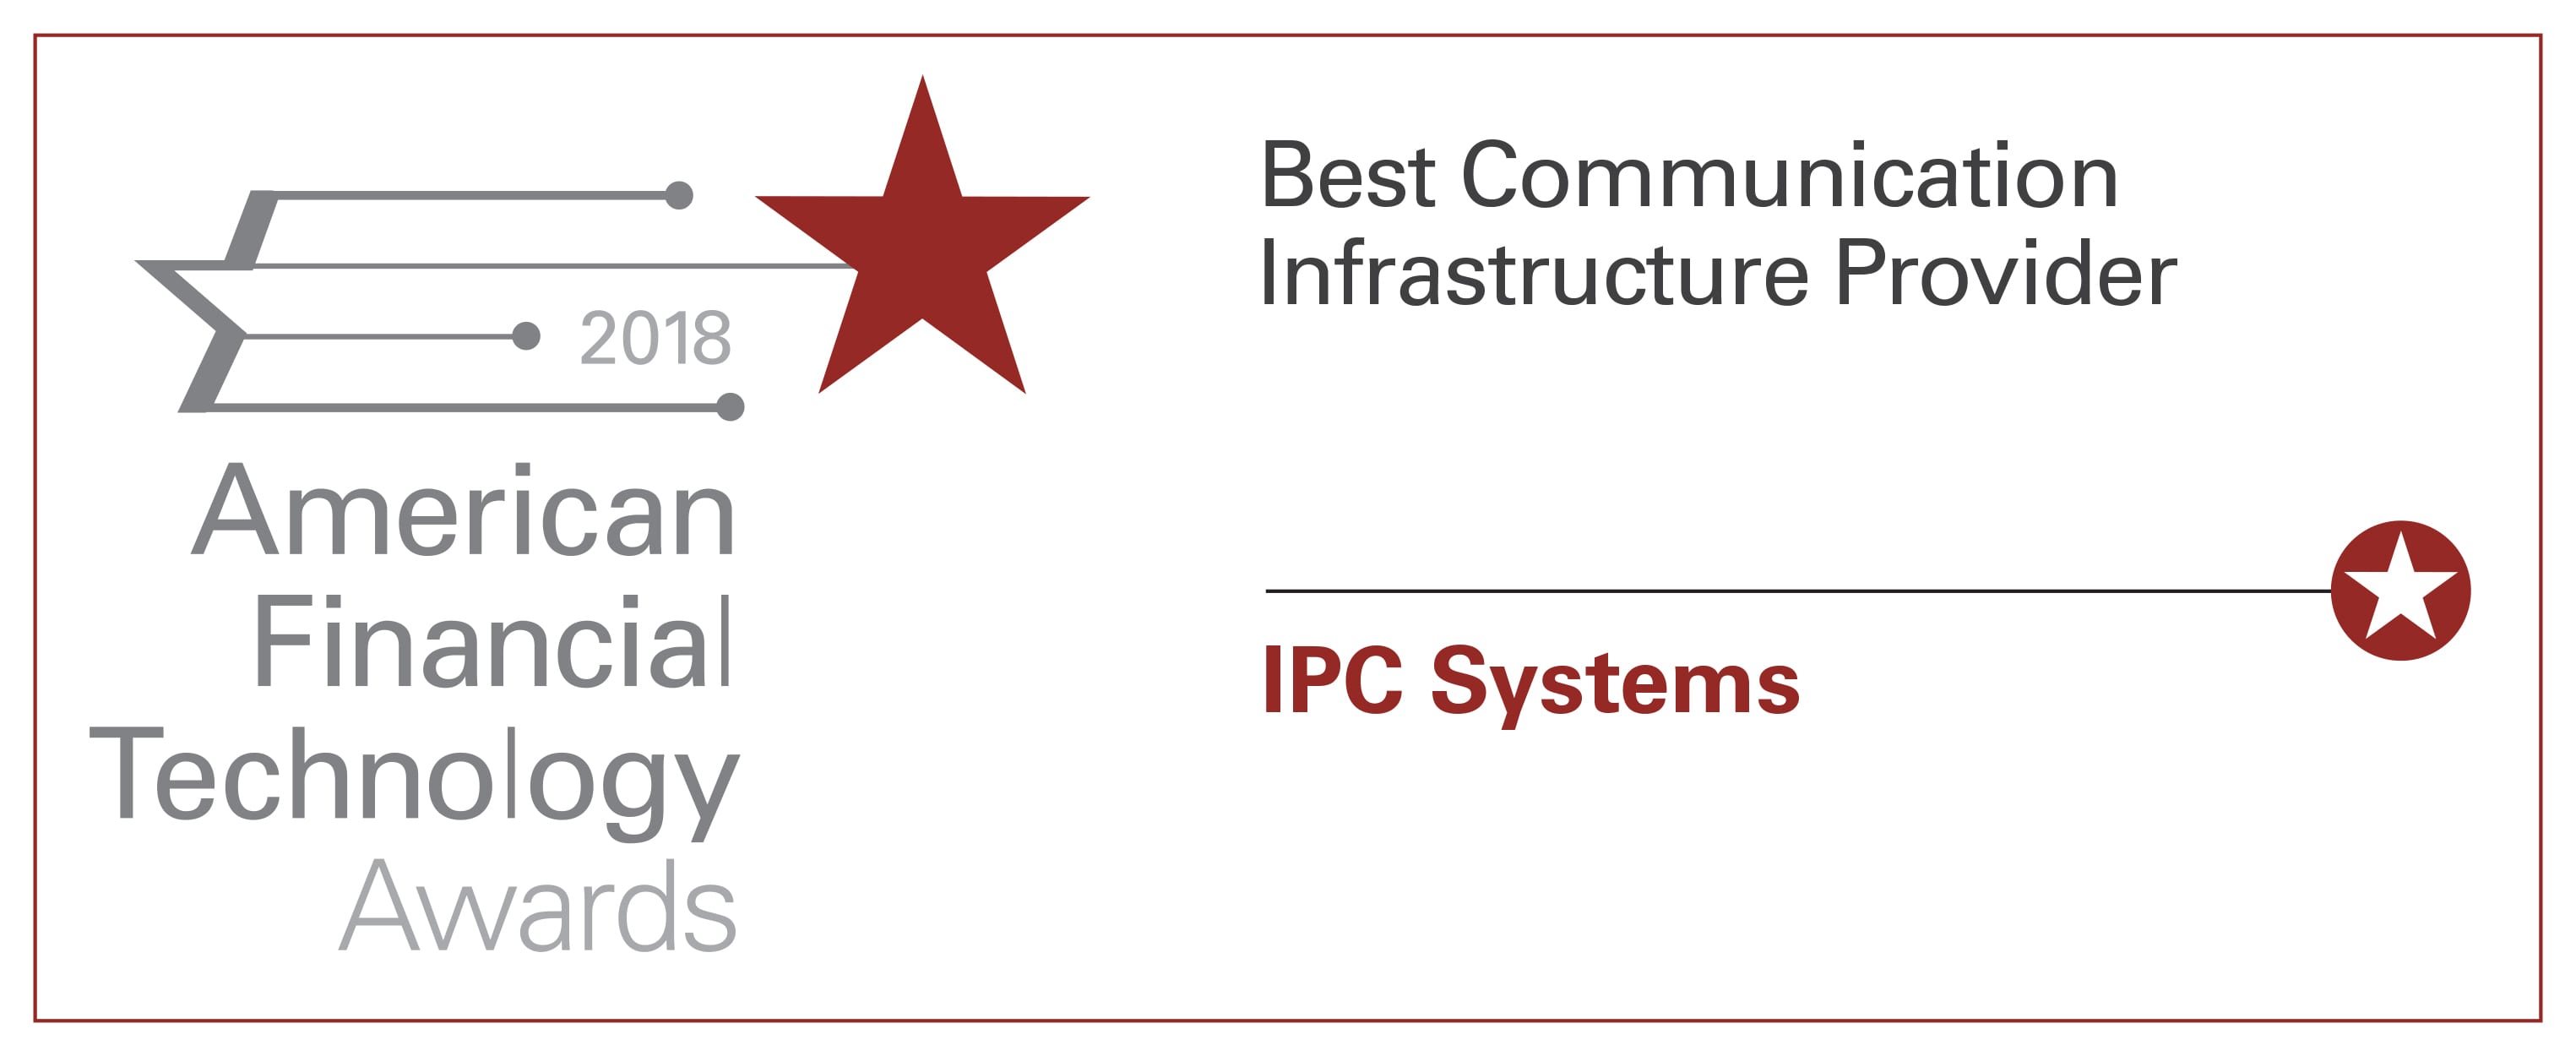 “Best Communication Infrastructure Provider” – AFTAs 2018